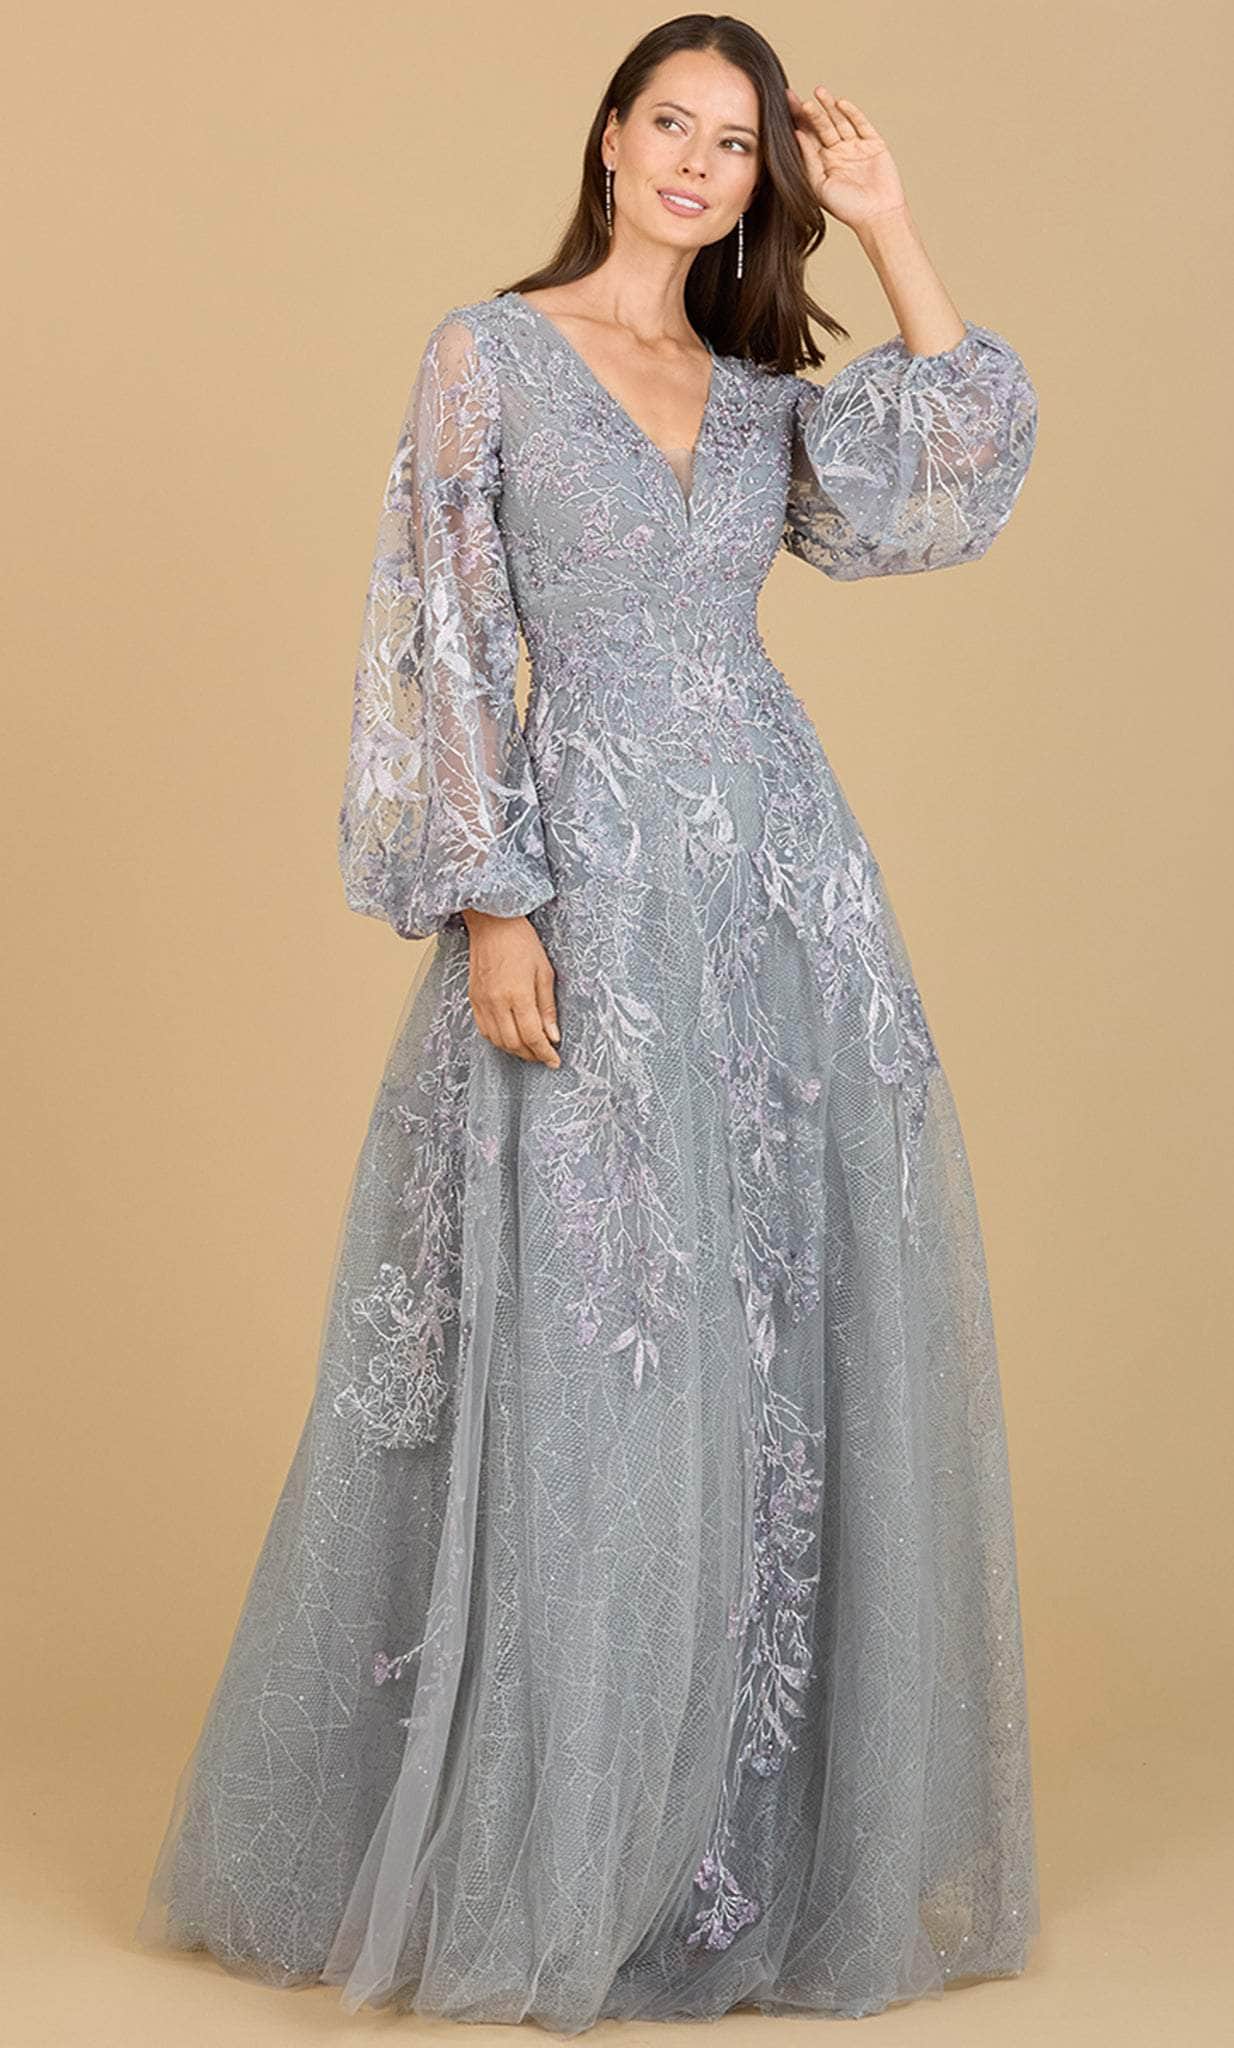 Image of Lara Dresses 29195 - Laced Tulle Semi-Ballgown